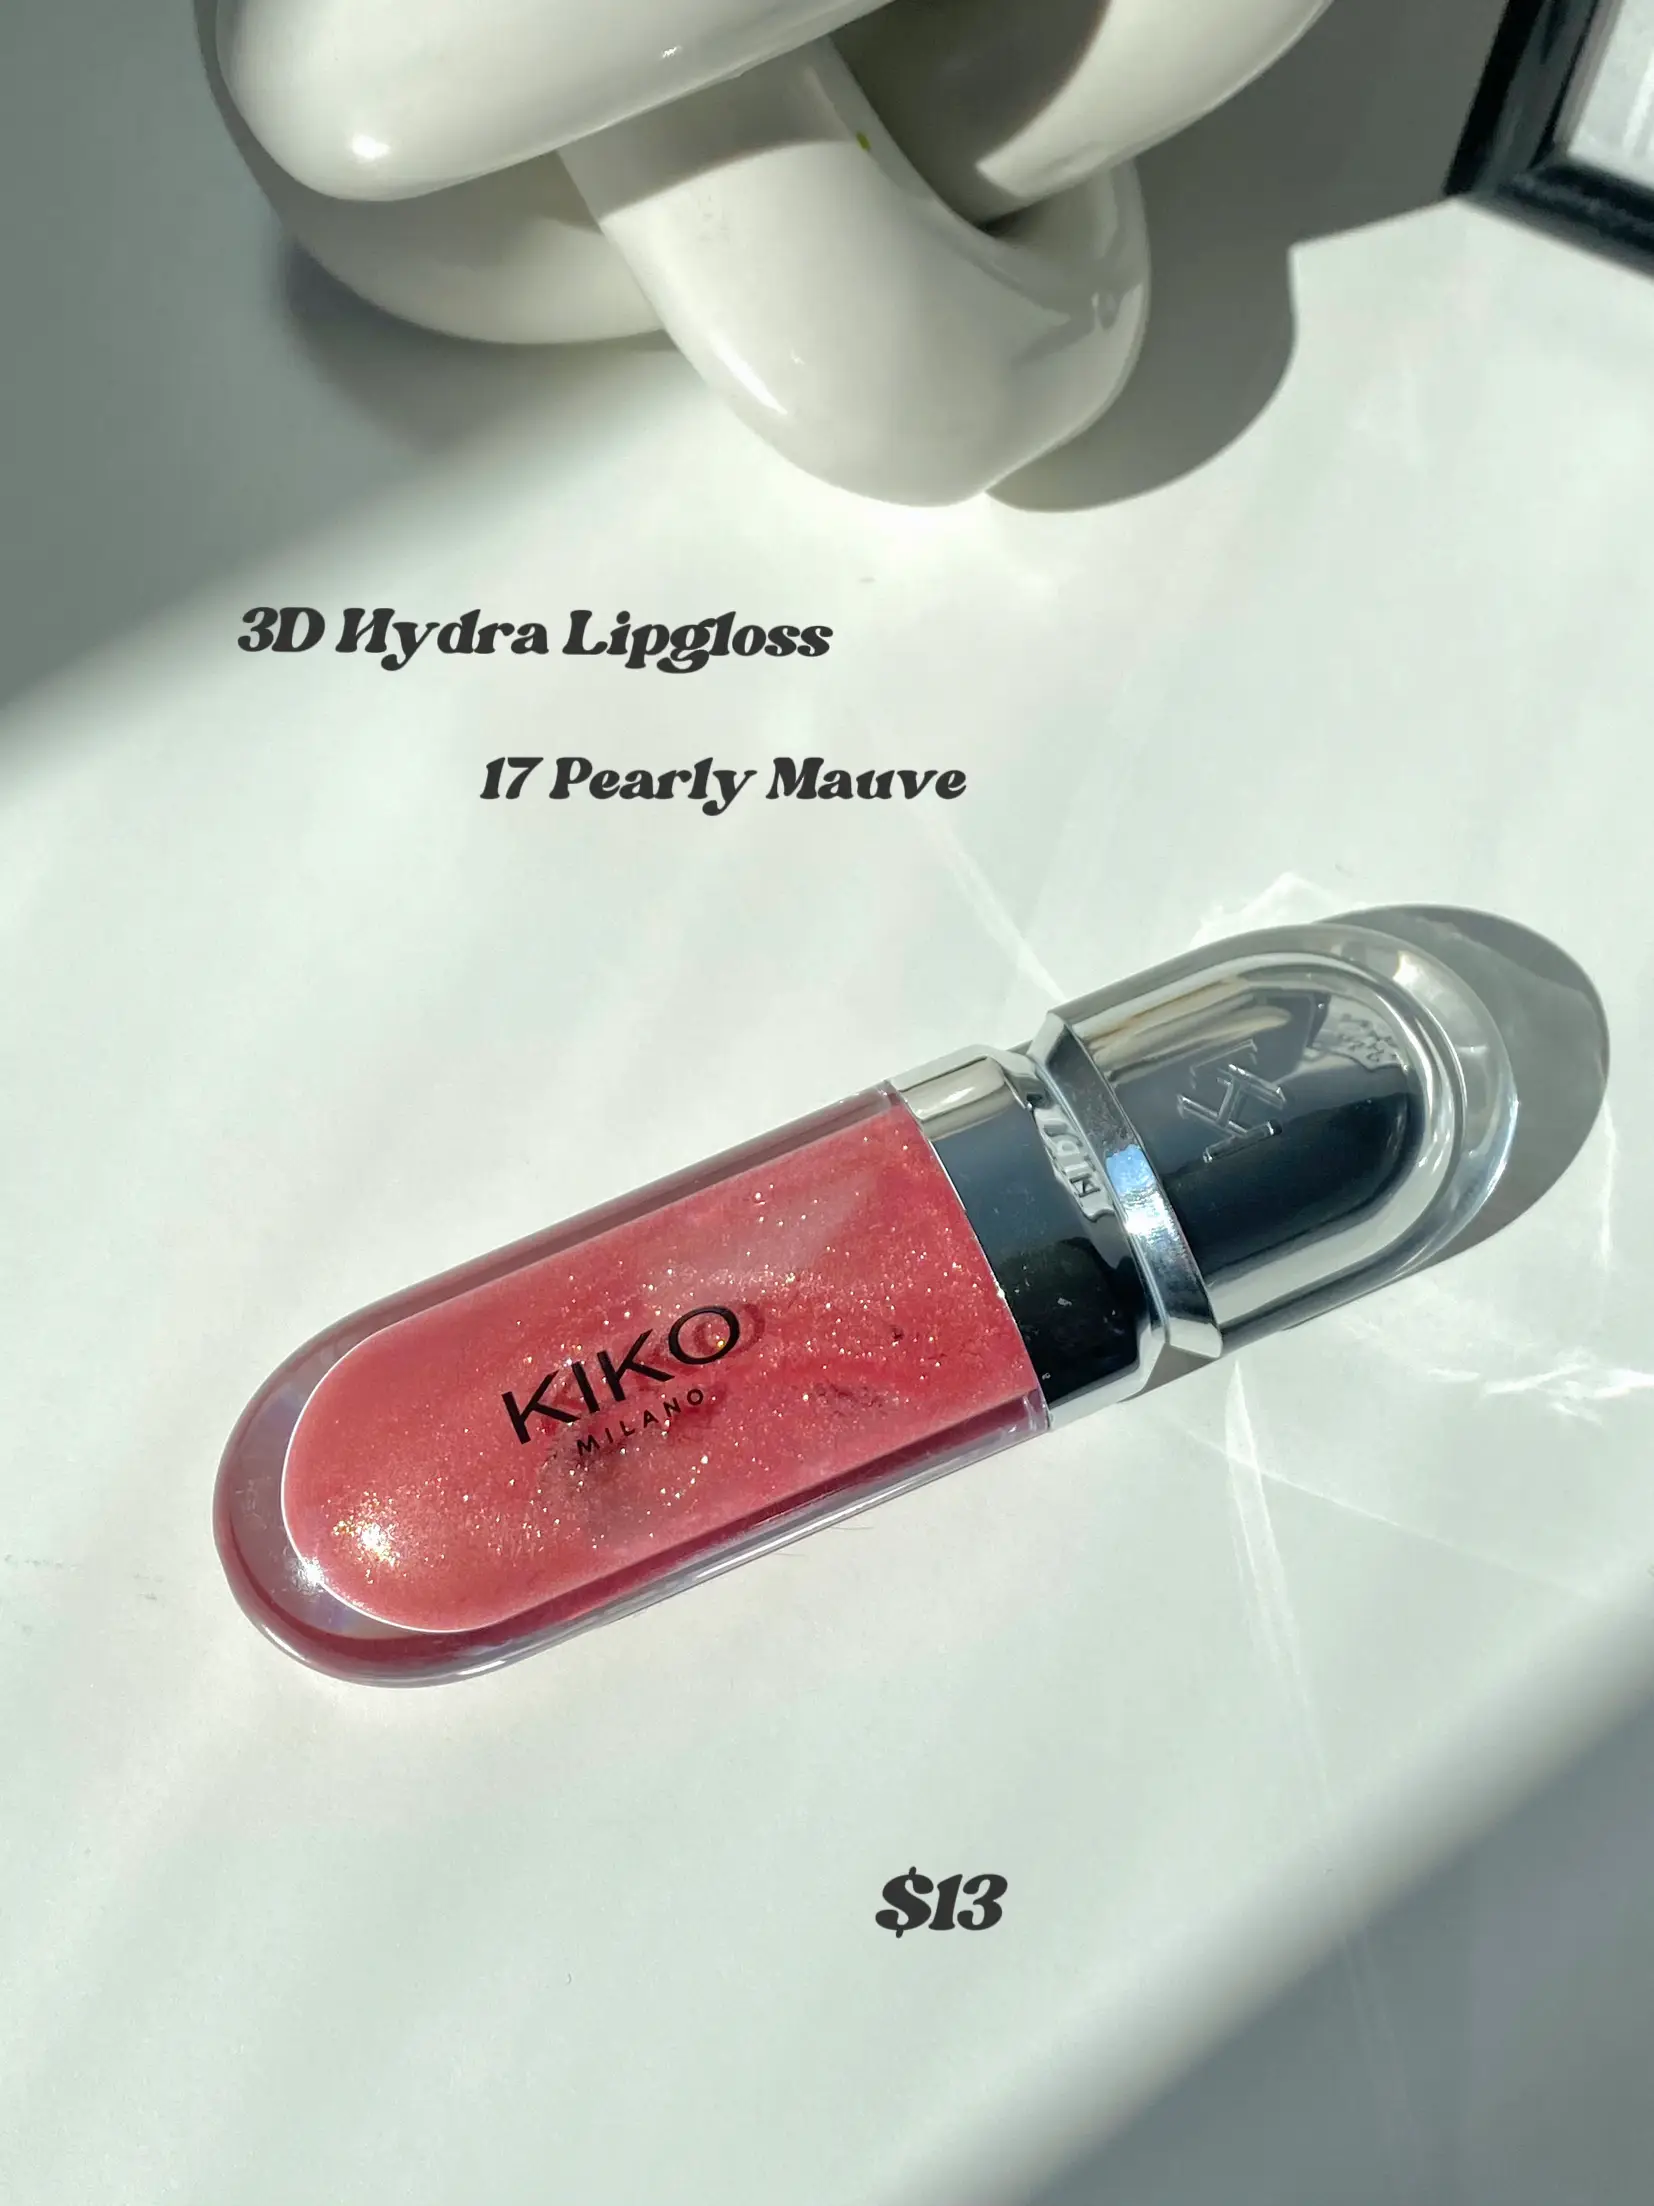 Kiko Hydra gloss 44 + Lip Marker long lasting 109 🫶🏻 it's a date! @K